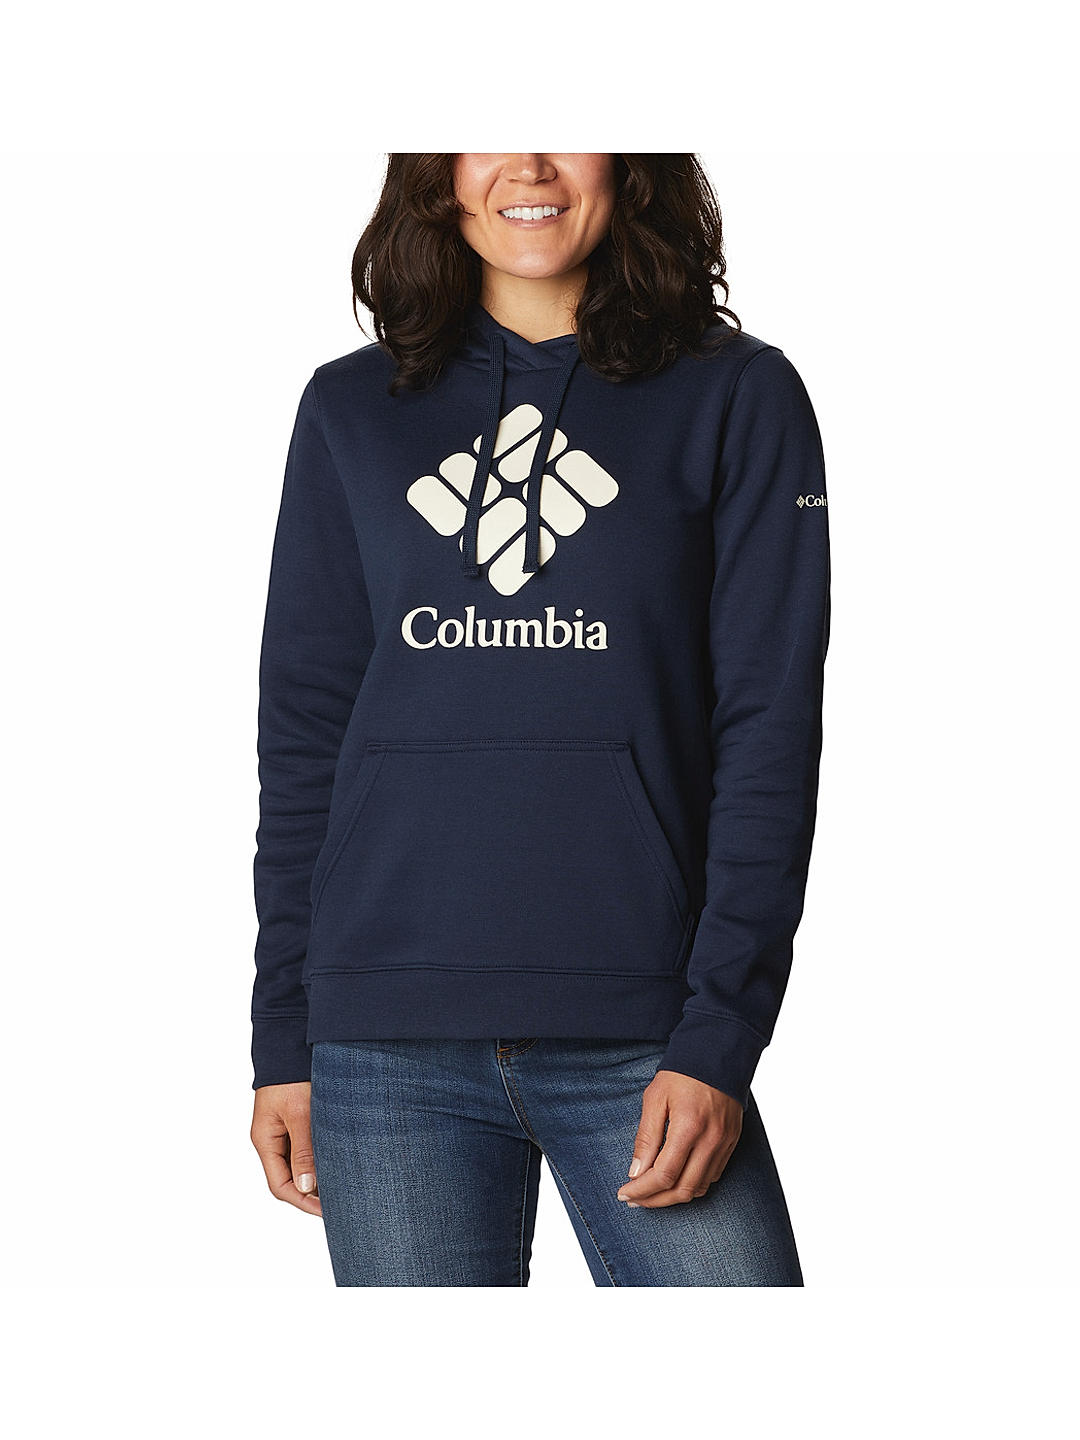 Buy Blue Columbia Trek Graphic Hoodie for Women Online at Columbia  Sportswear